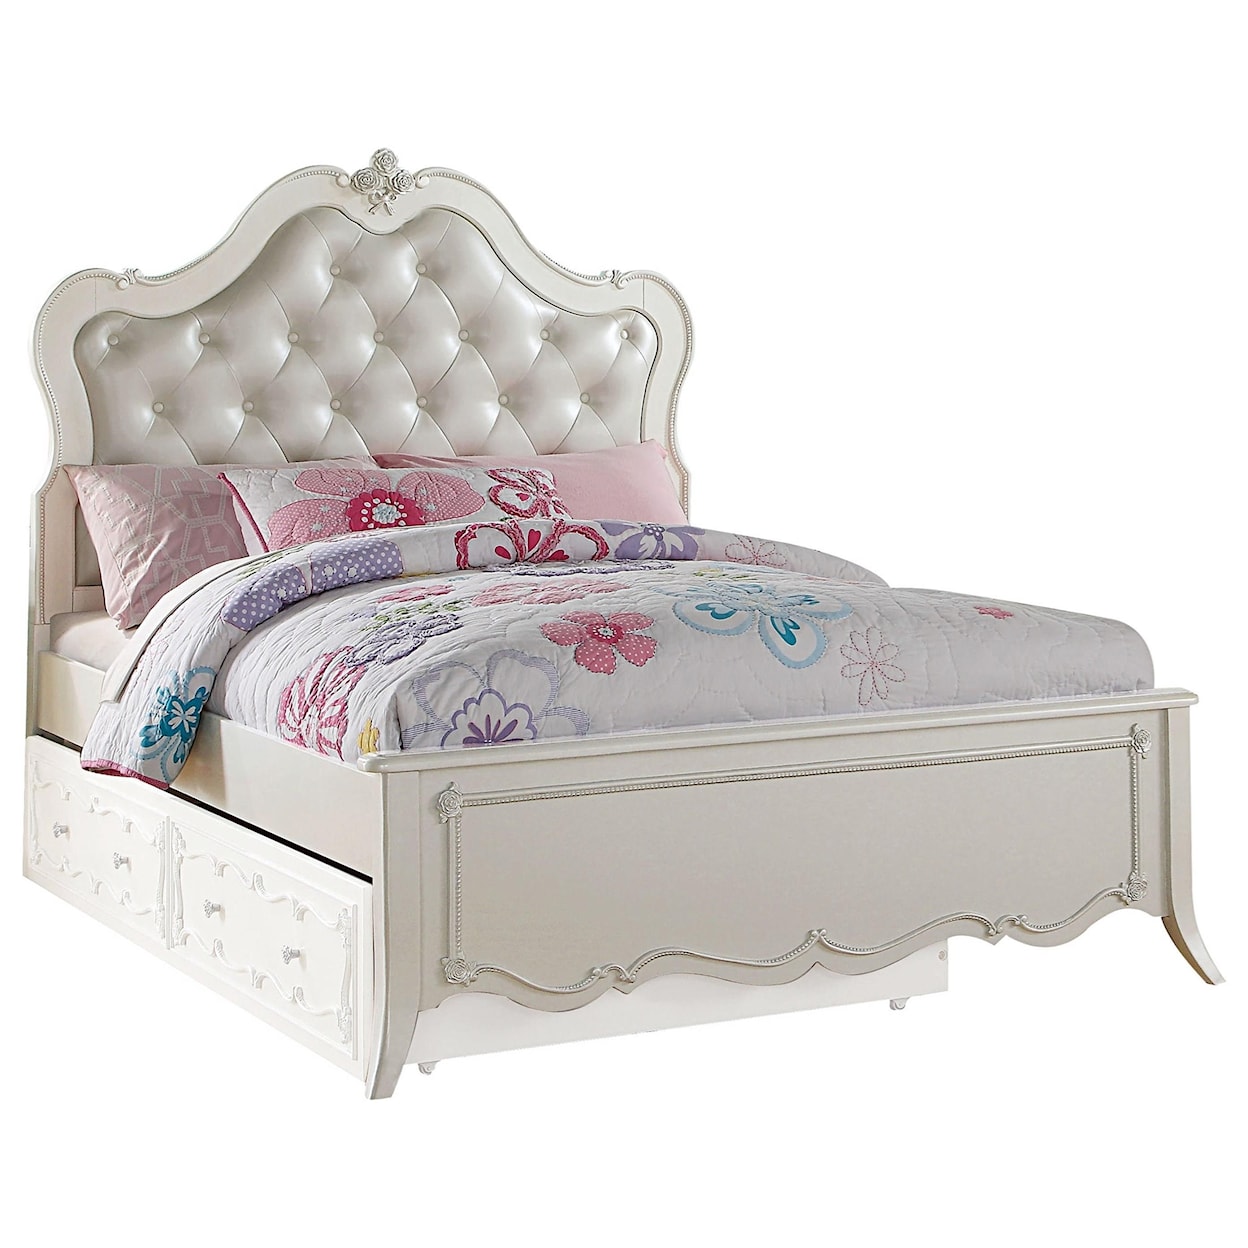 Acme Furniture Edalene Full Bed